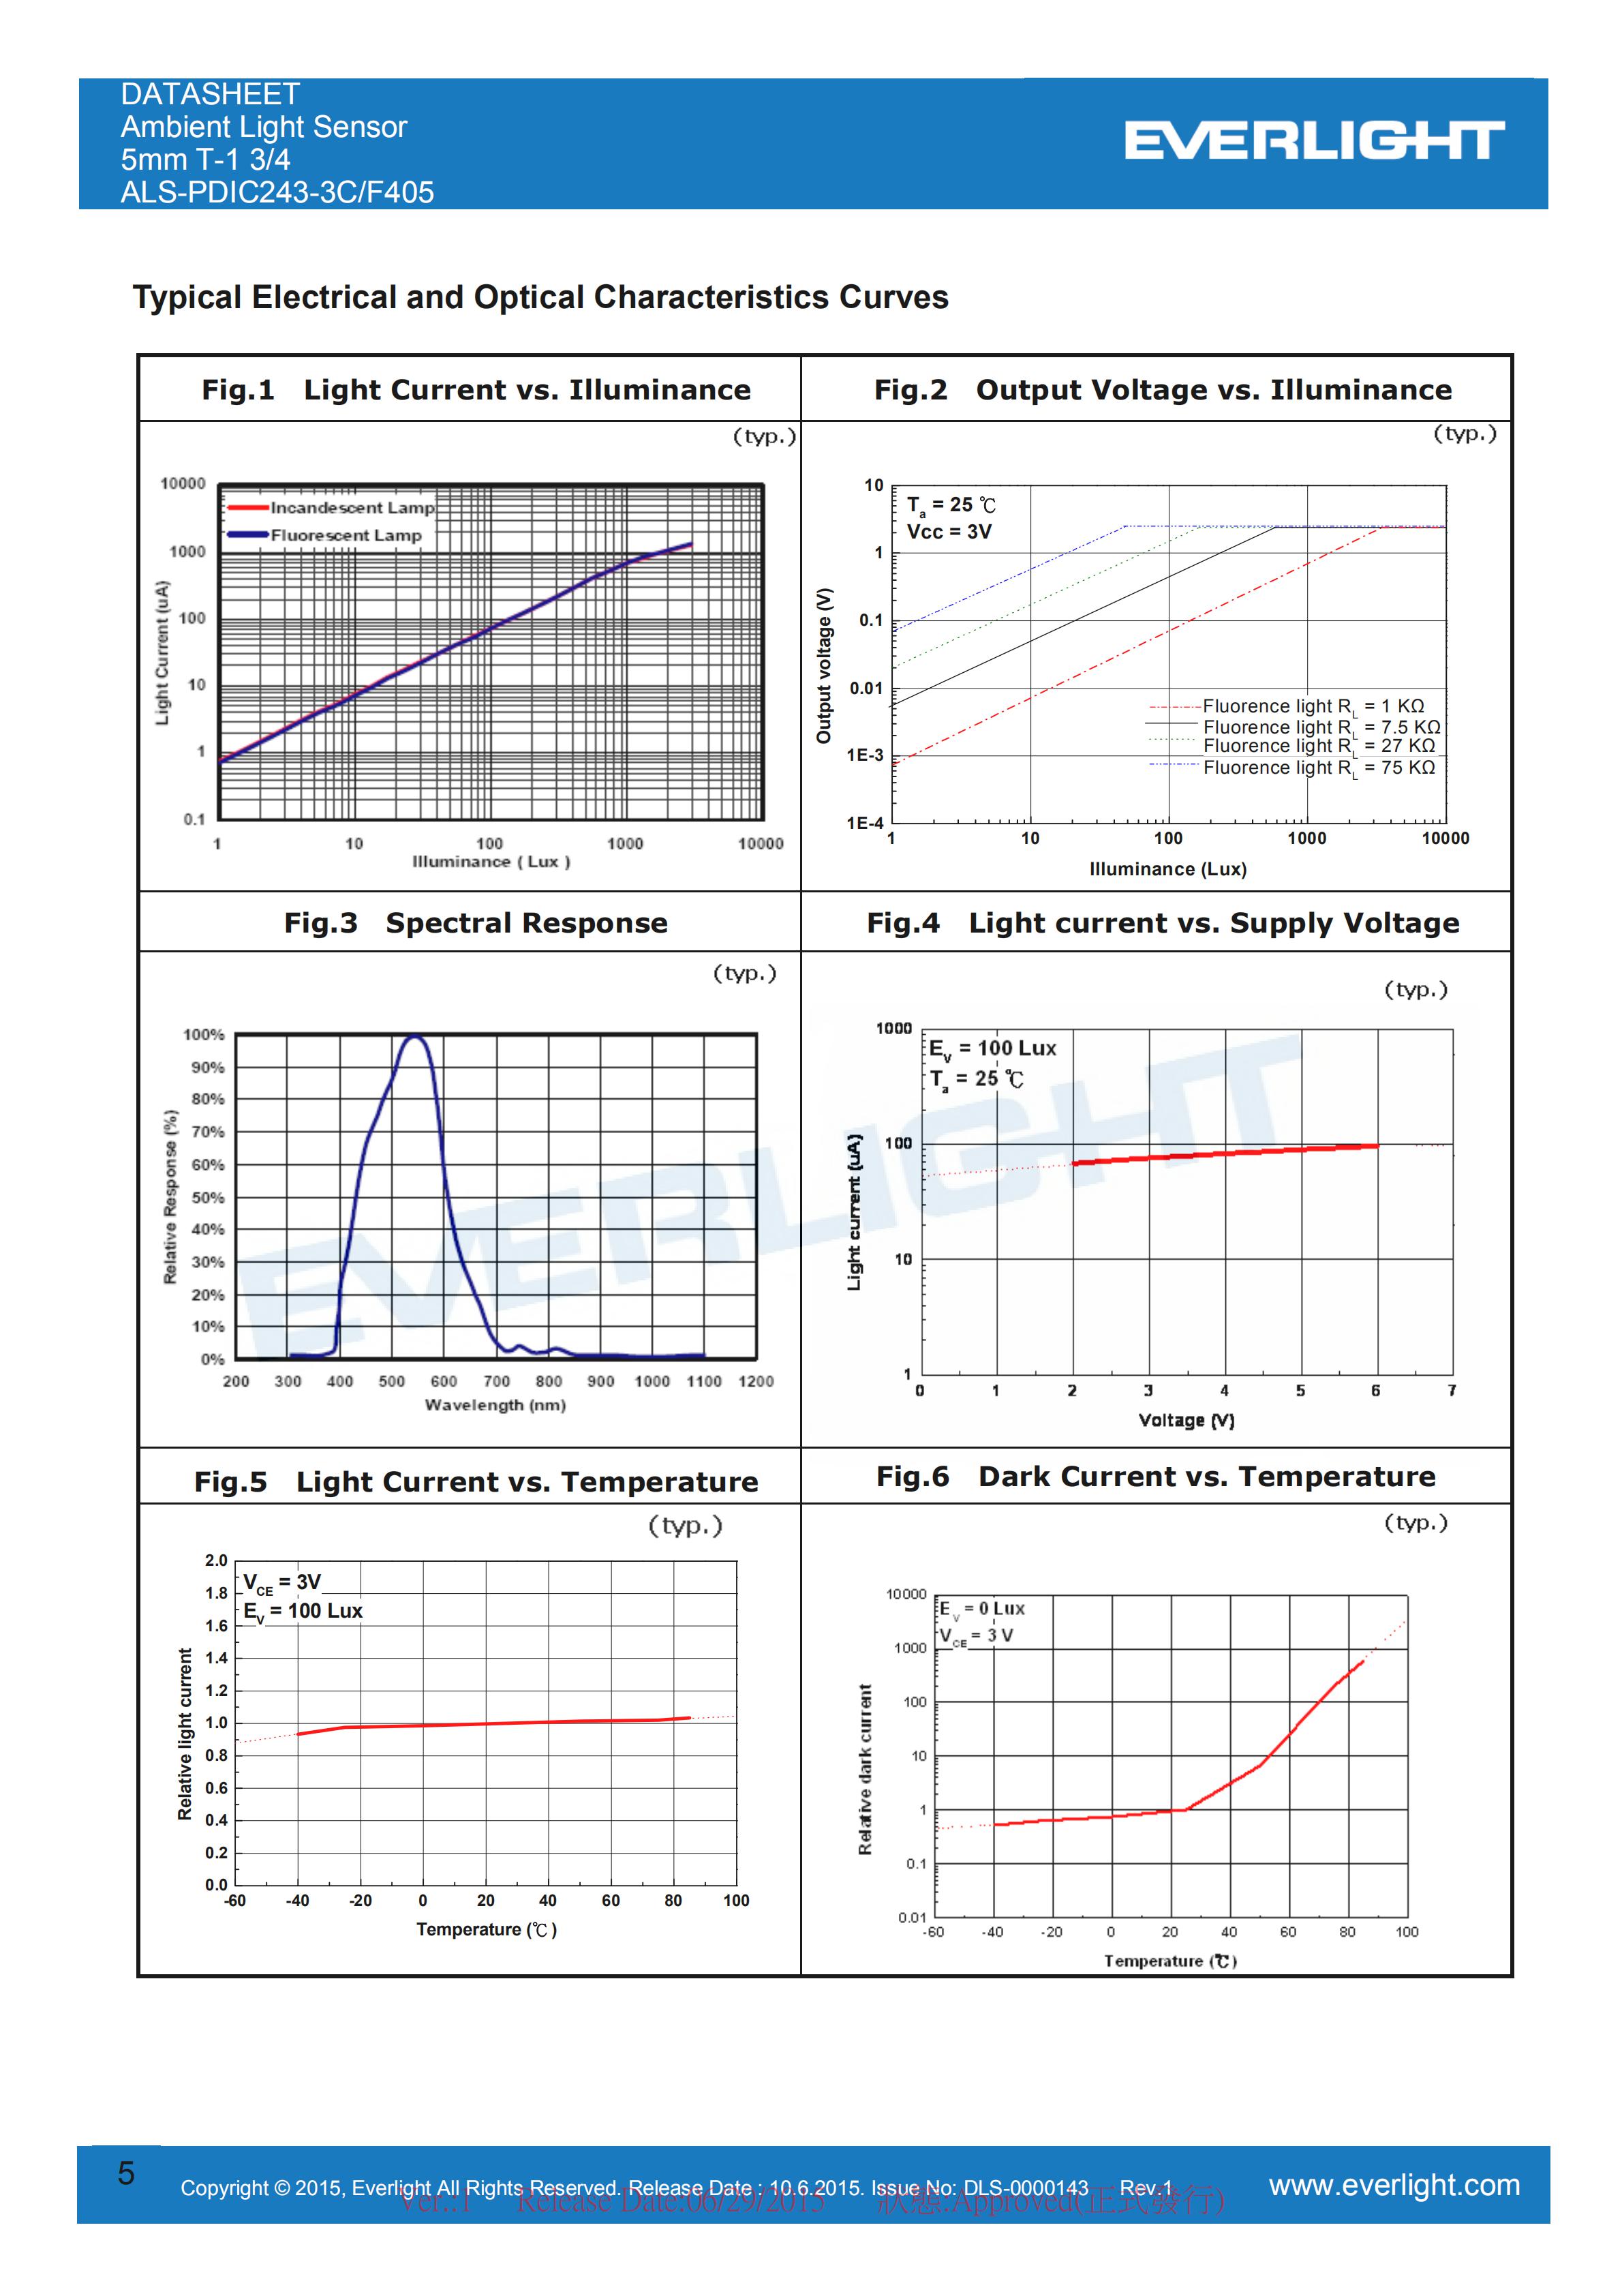 Everlight Ambient Light Sensor ALS-PDIC243-3C/F405 Datasheet